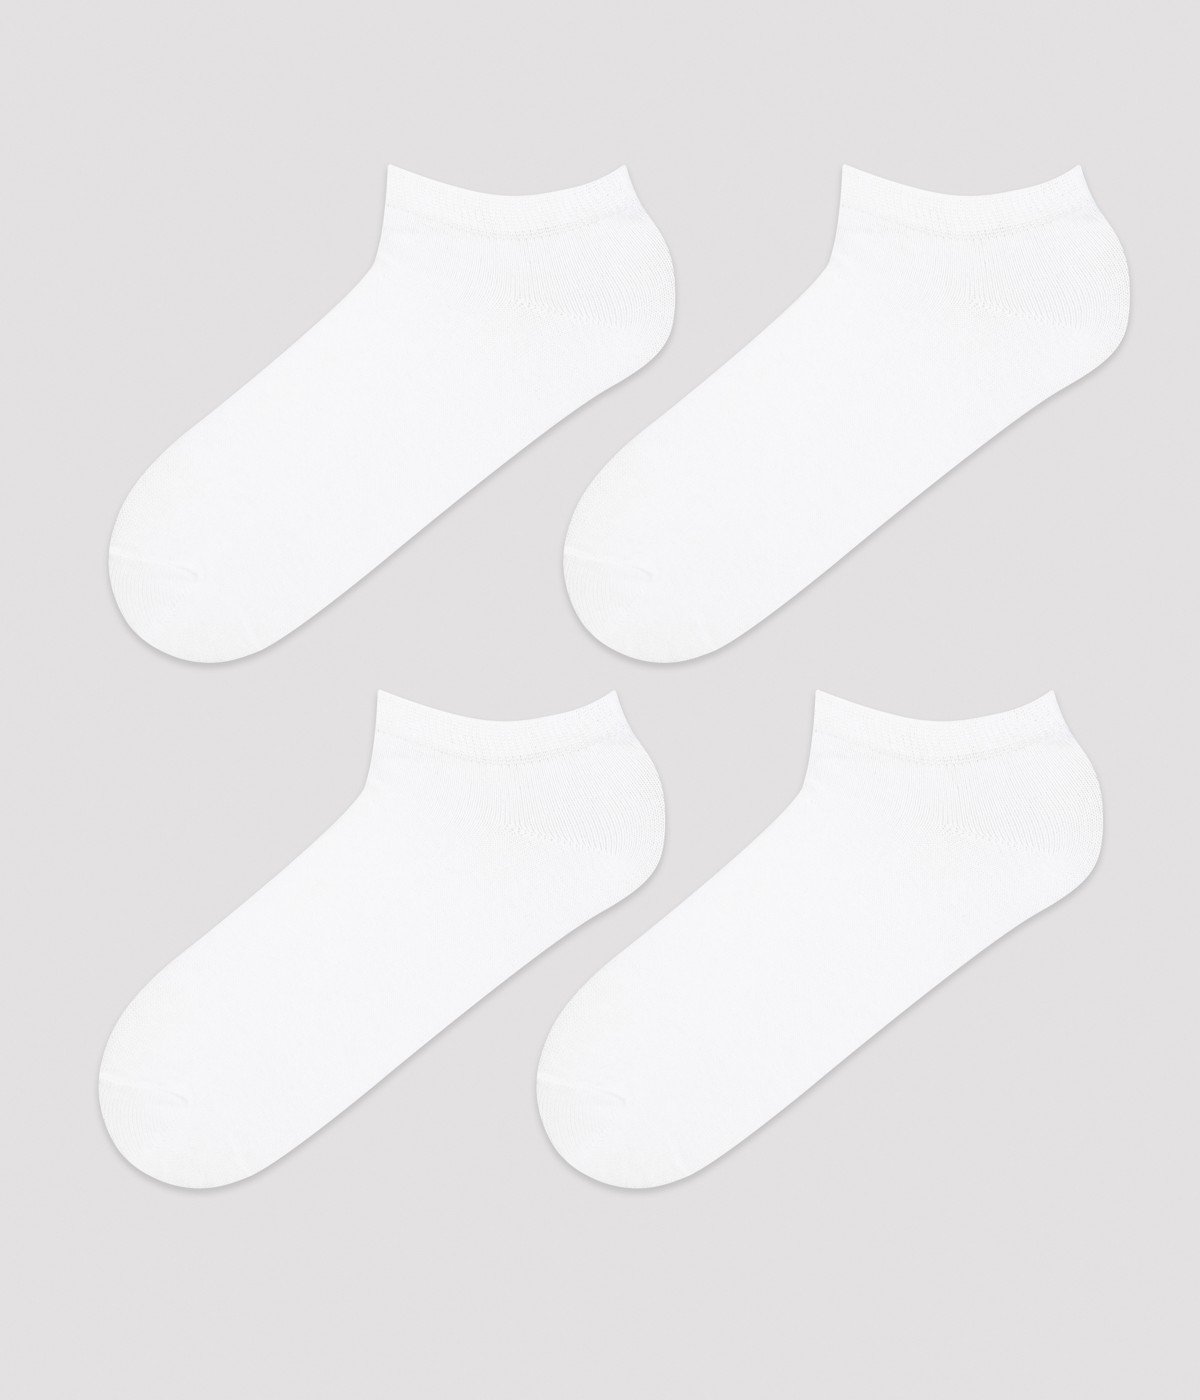 Ciorapi tip talpici Basic, 4 perechi